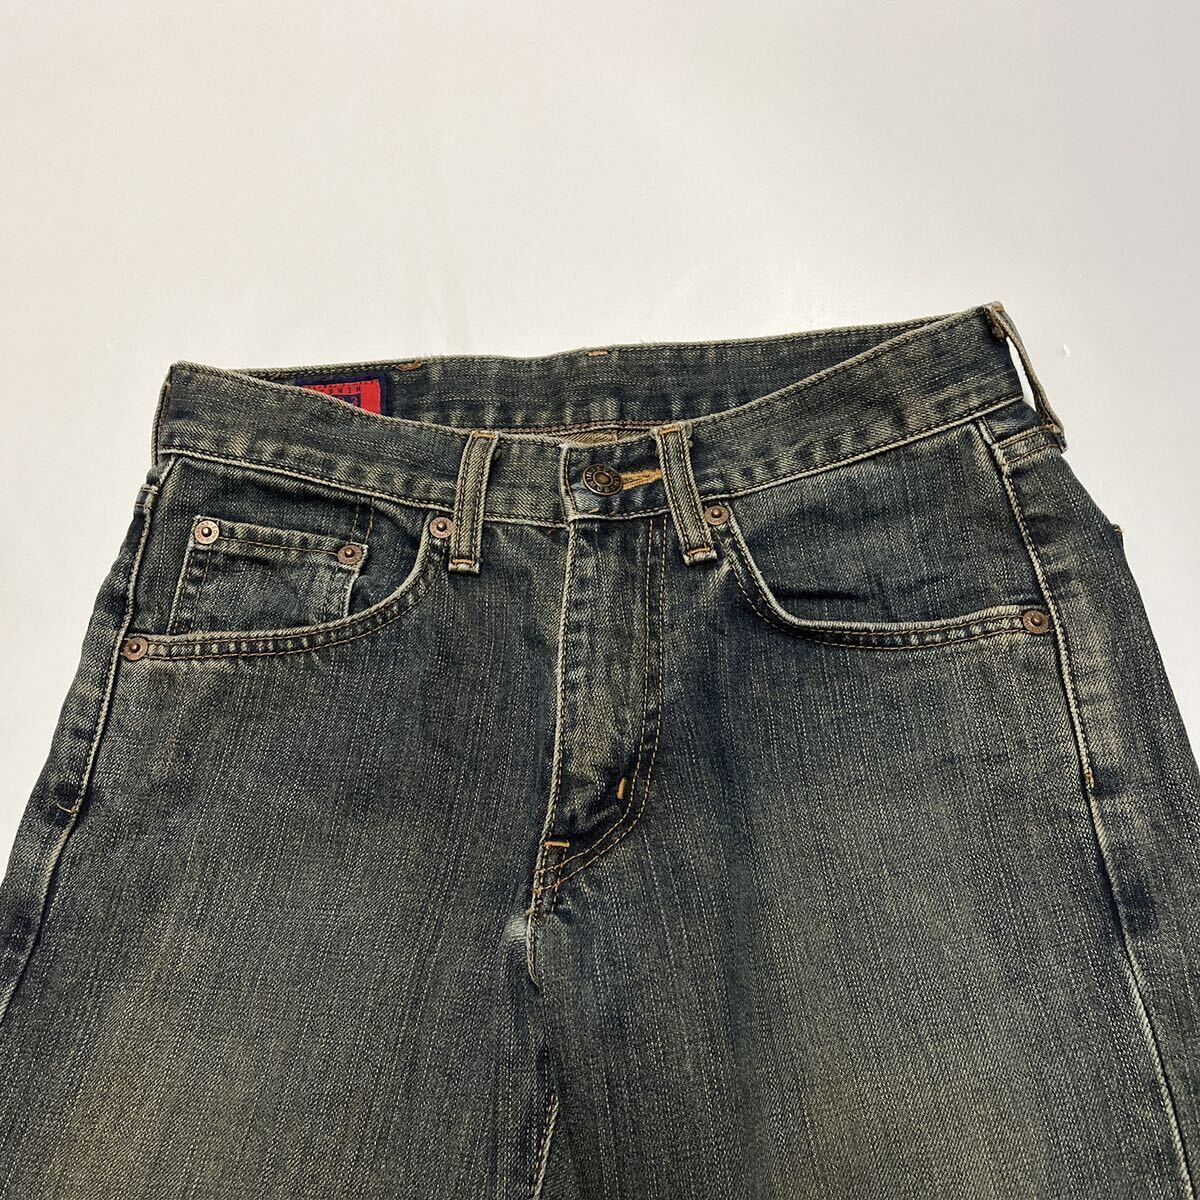 EDWIN Edwin 503ZZ 50302 постоянный распорка джинсы Denim брюки W27 L33 сделано в Японии 